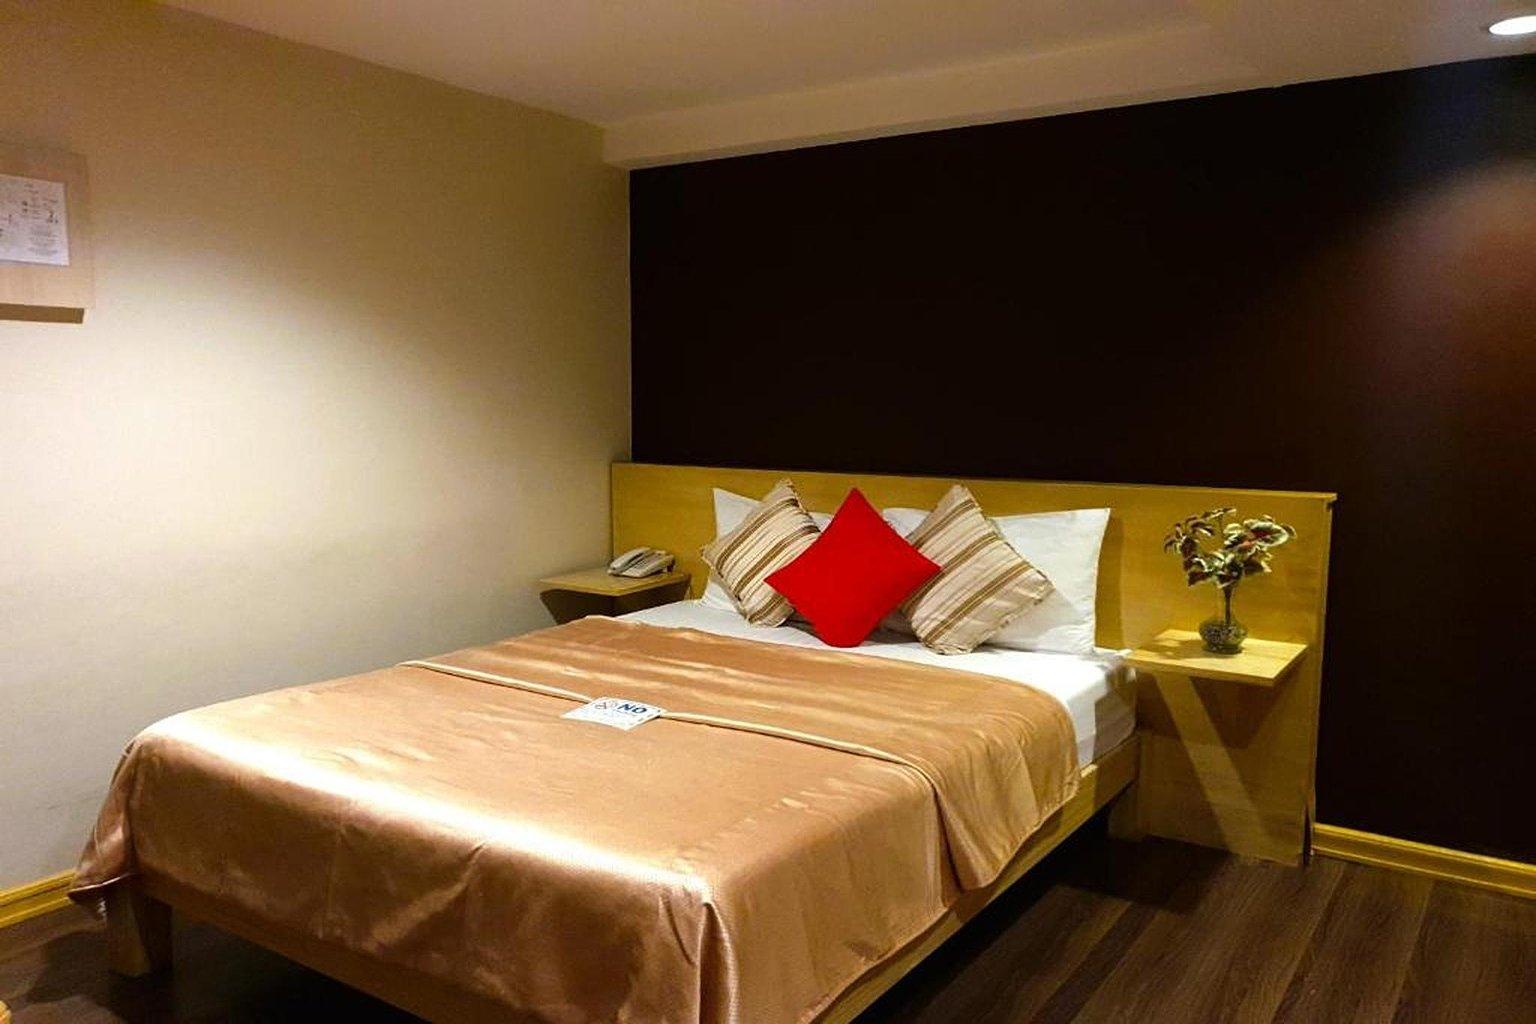 Standard Room - Festive Hotel（節慶酒店） / Festive Hotel